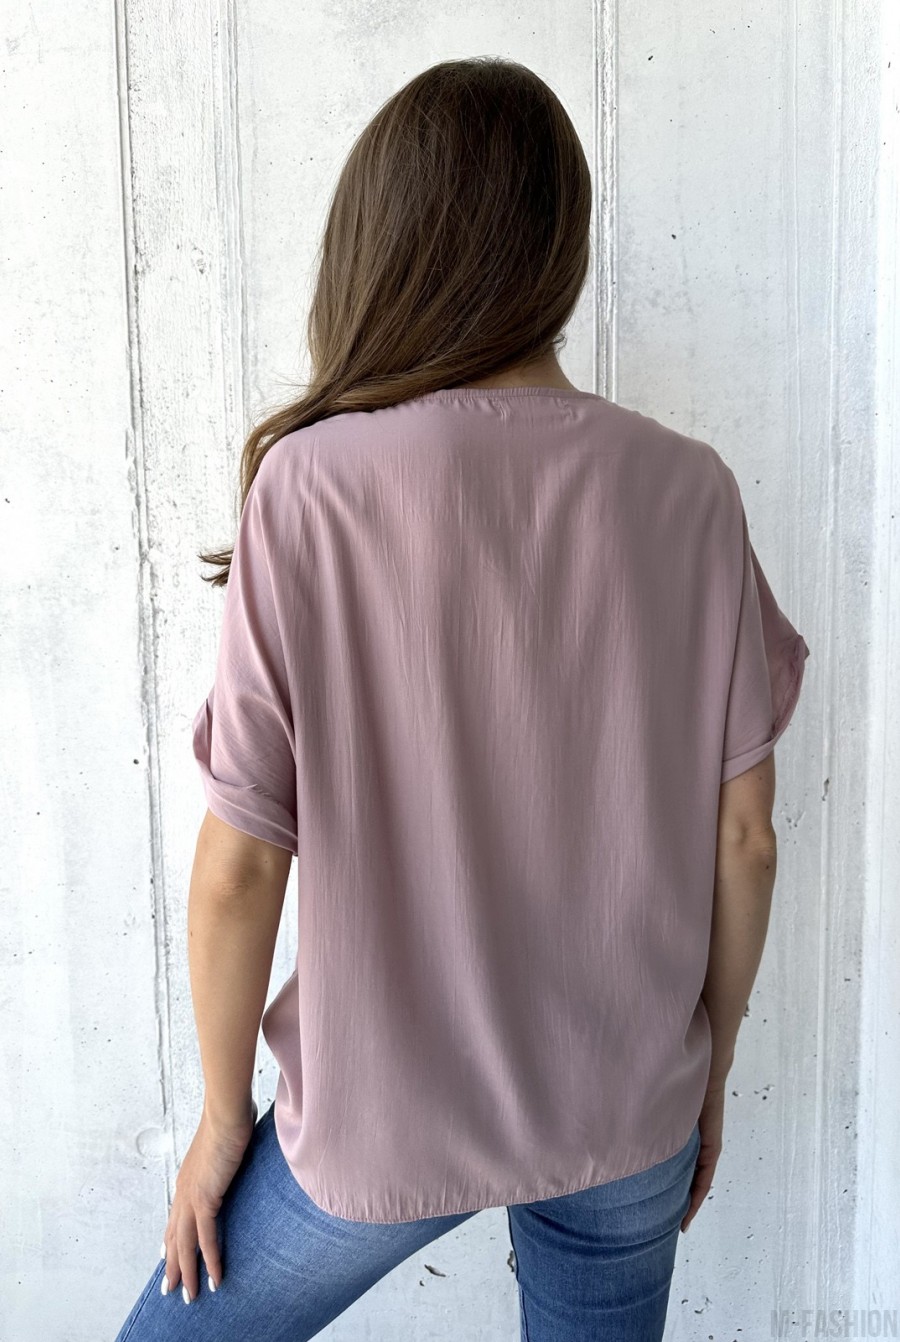 Розовая блуза с завязкой - Фото 3